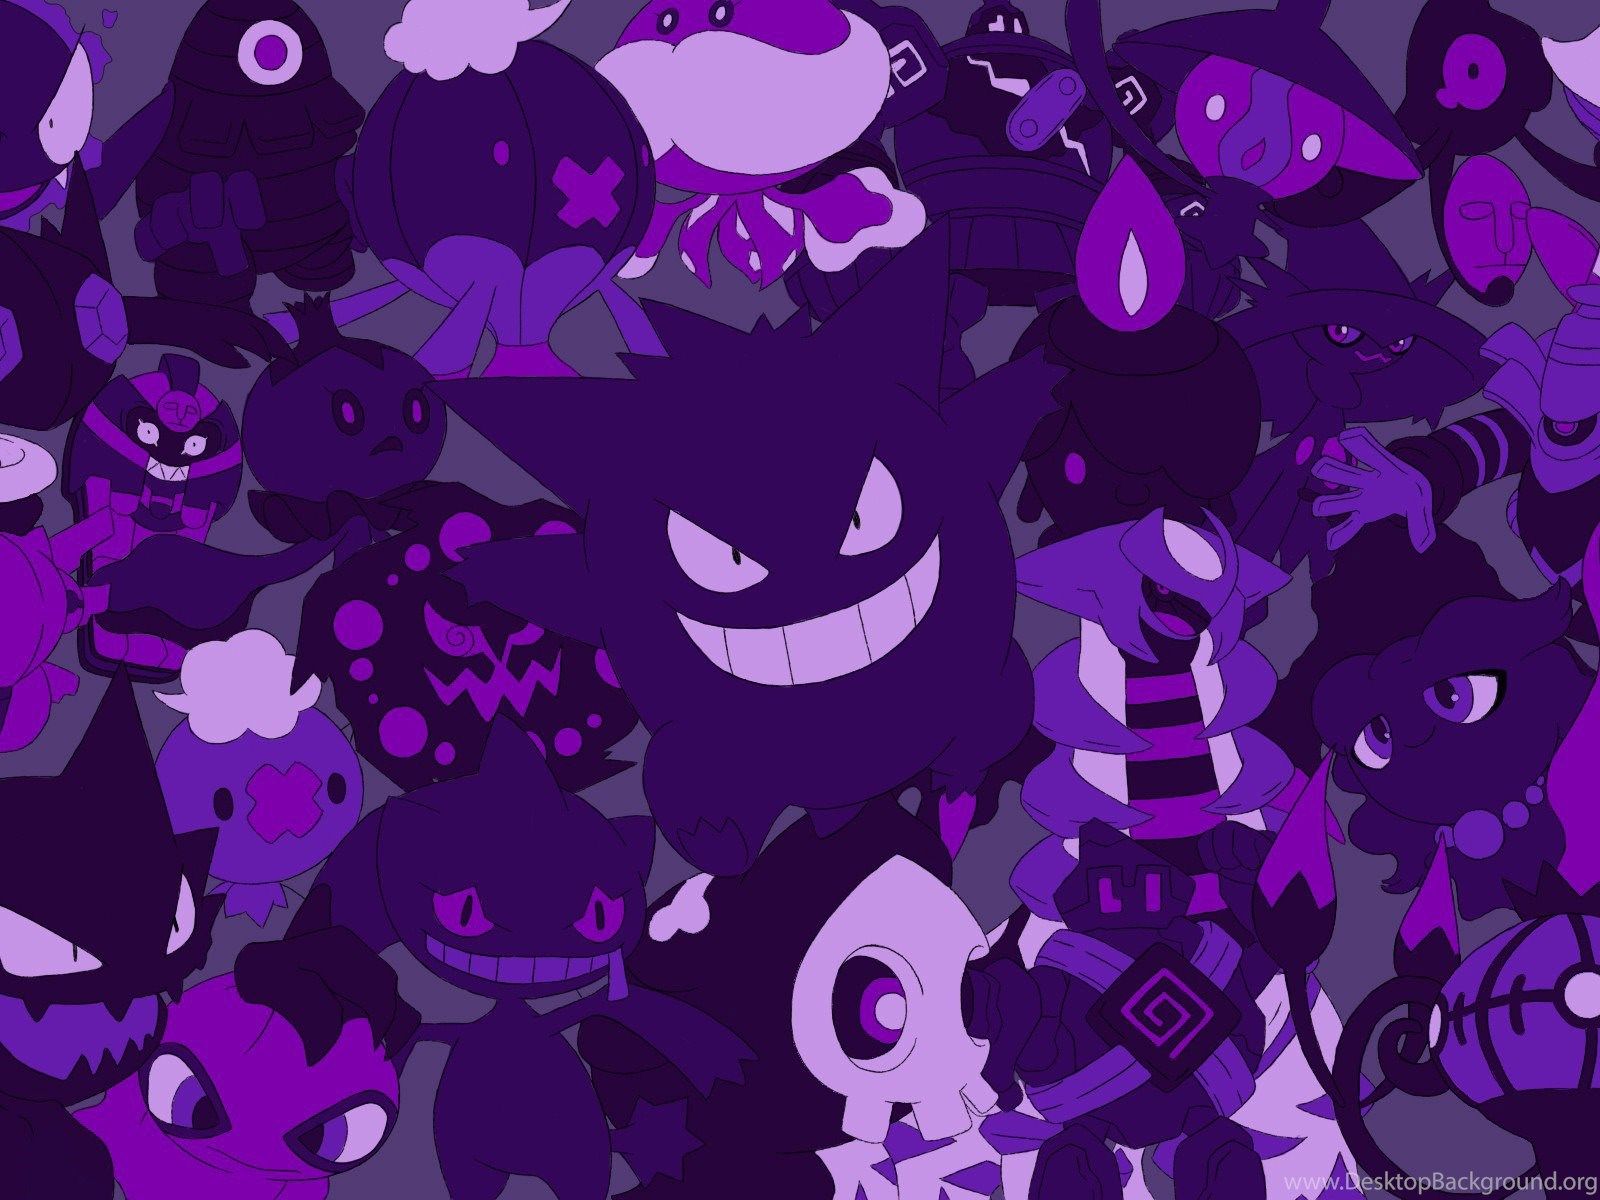 Purple Pokemon Wallpaper Anime .desktopbackground.org